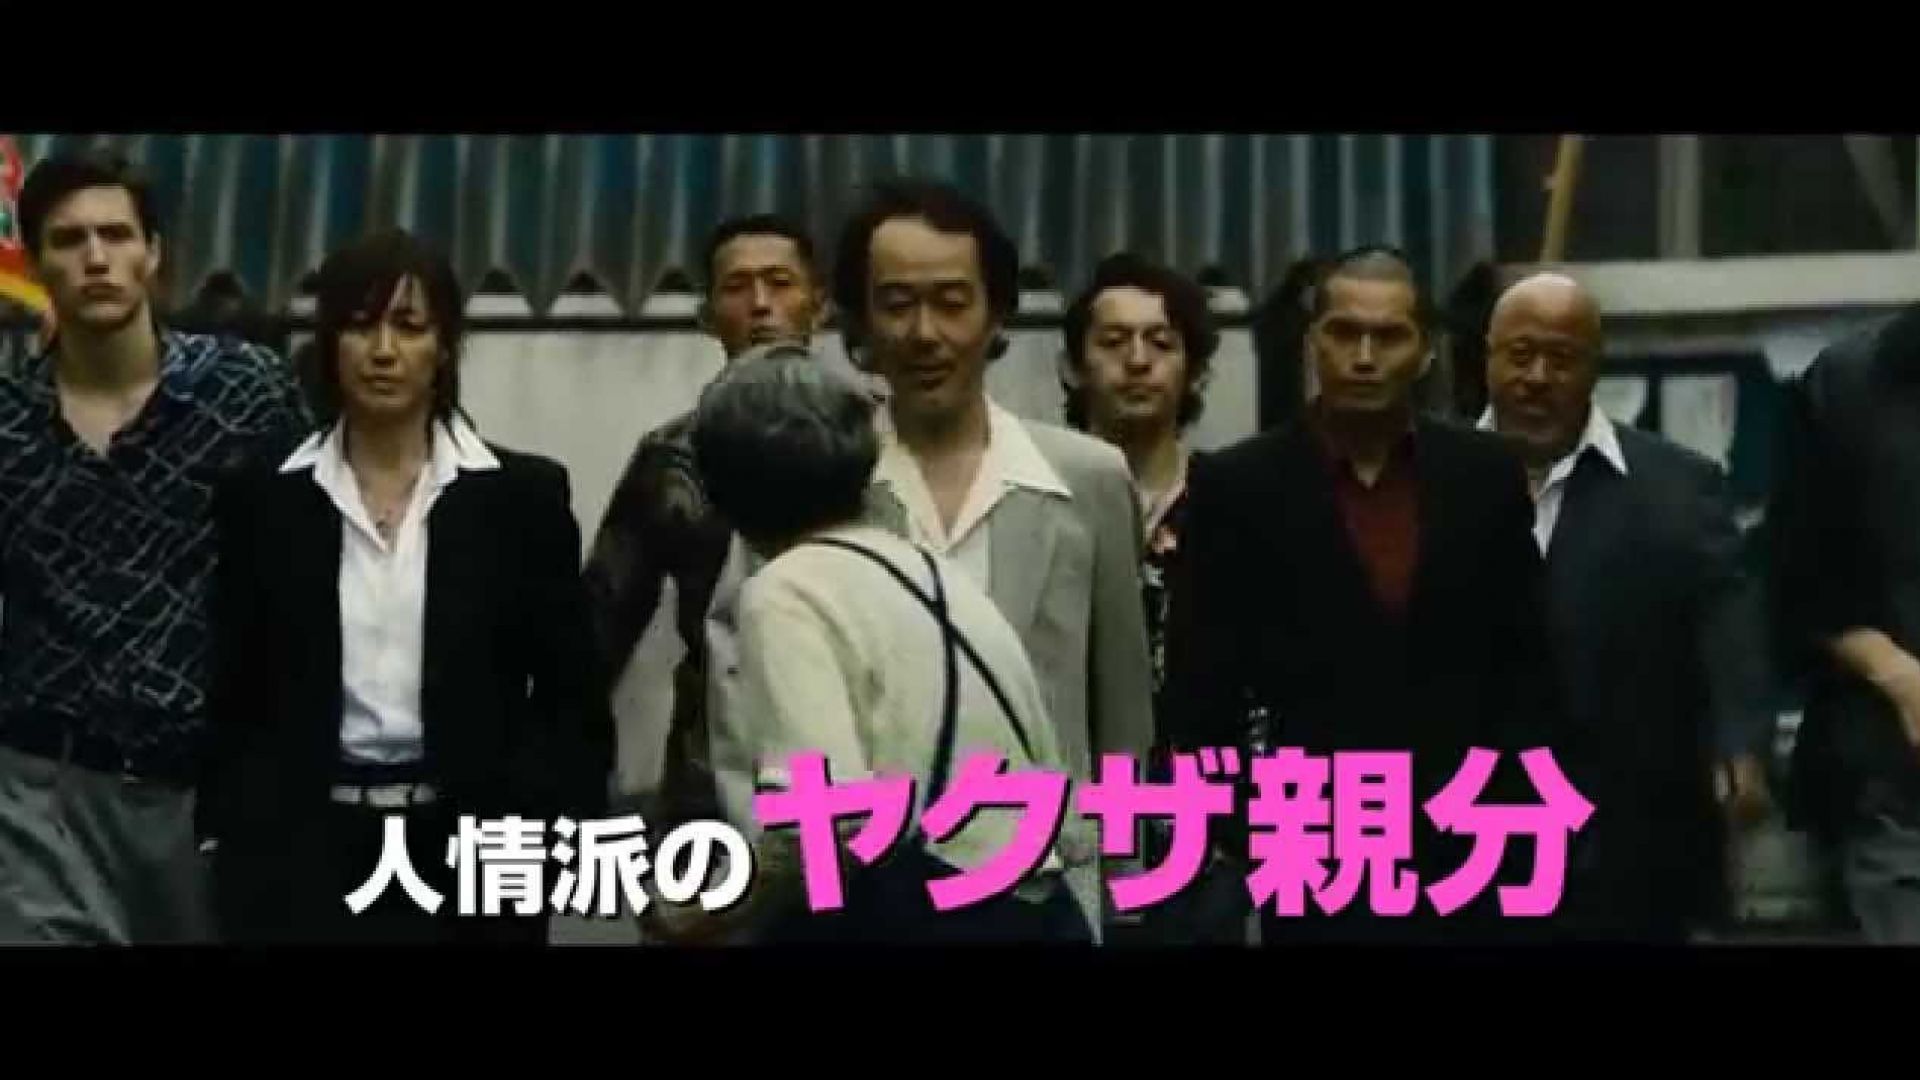 Takashi Miike S Yakuza Apocalypse The Great War Of The Underworld Coming To The Us Cultjer